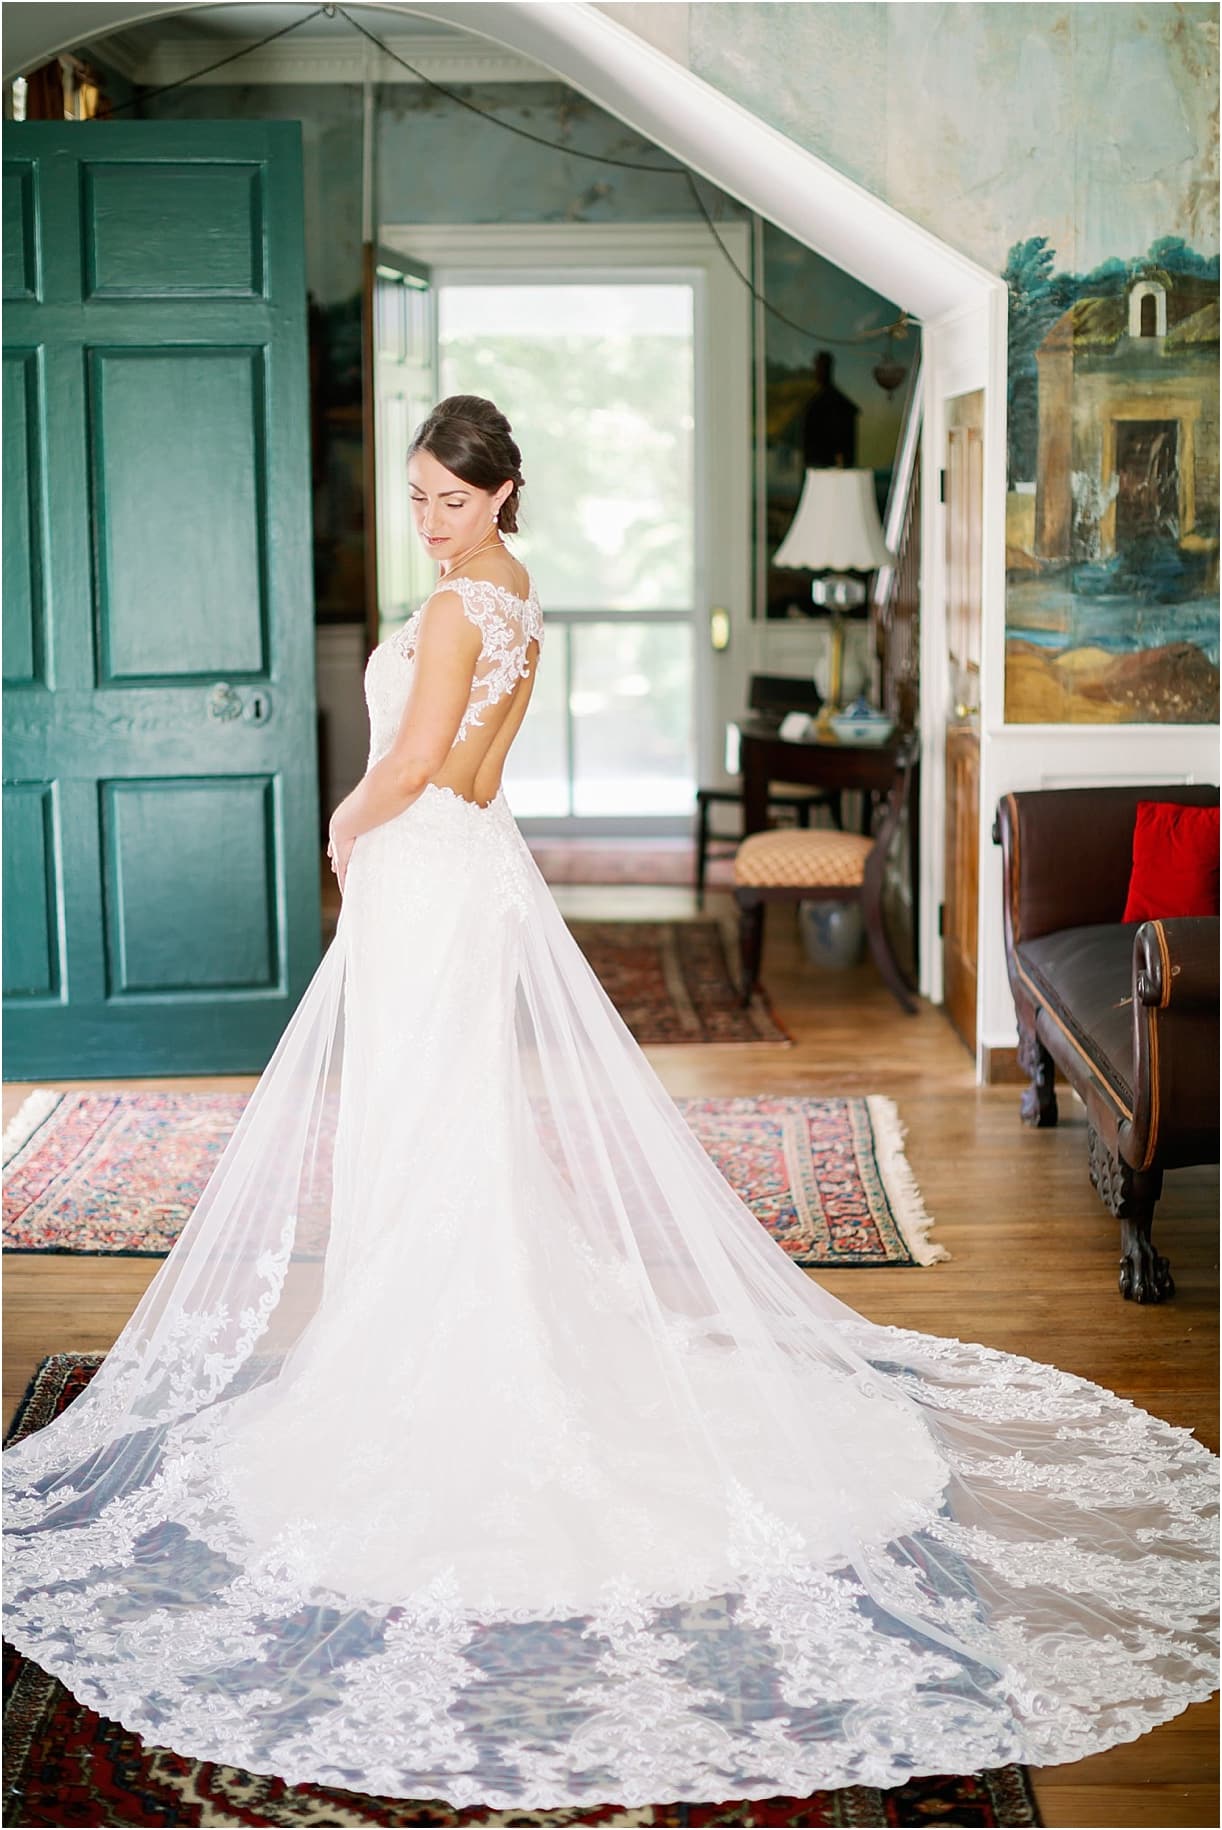 Cape Charles Wedding Venues | Blue Wedding | Hill City Bride Virginia Weddings Blog | Gown Dress